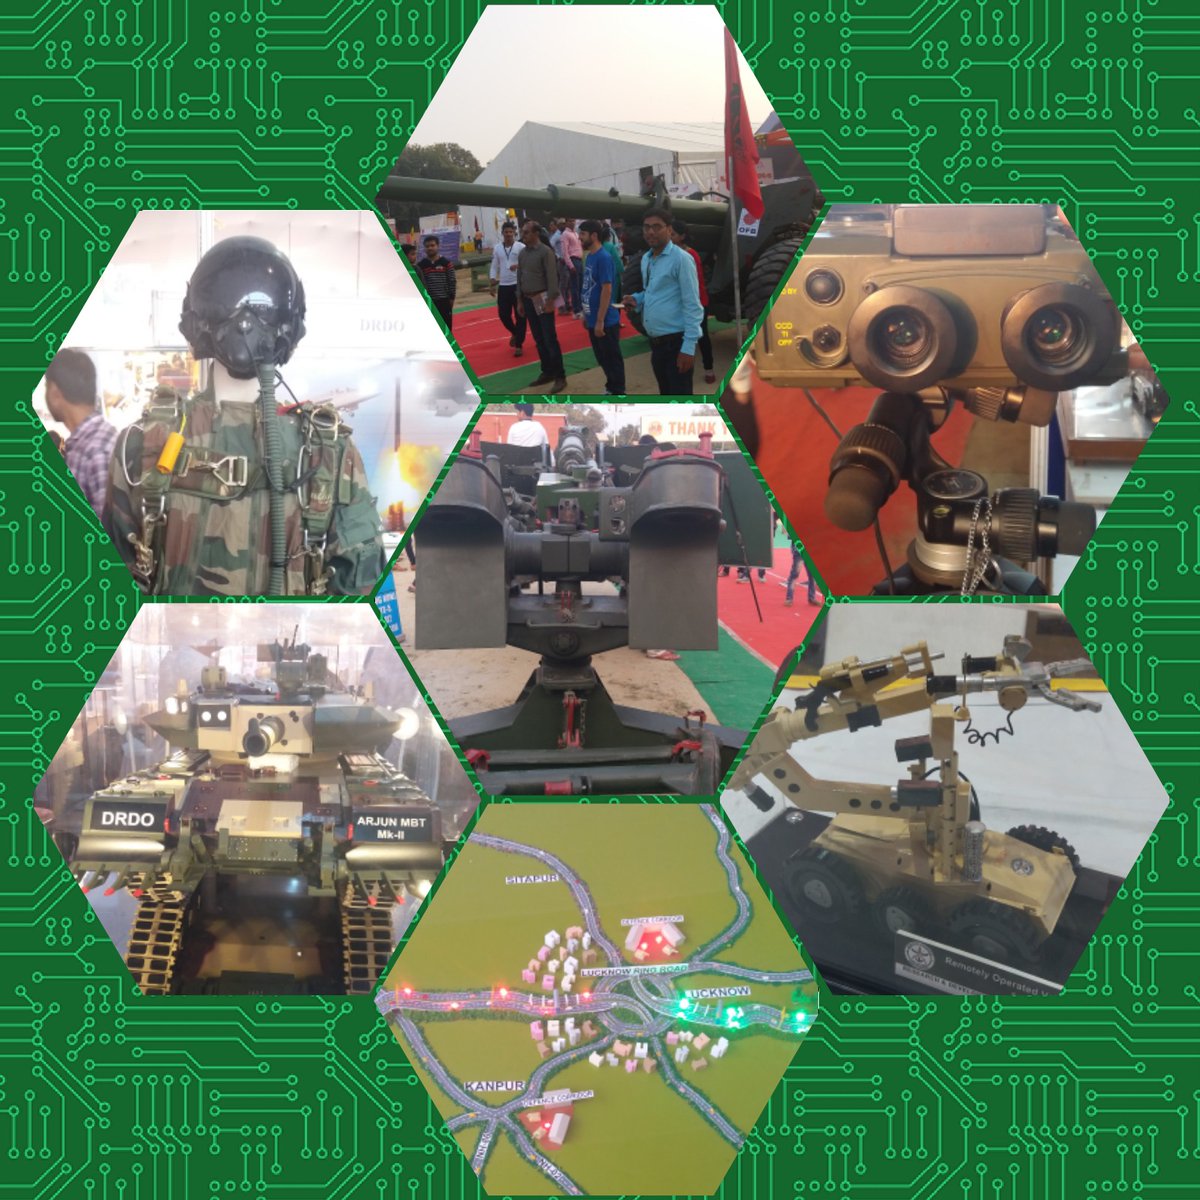 Jaipur Defense expo: Unmanned aerial vehicles, electro-optics were center of focus